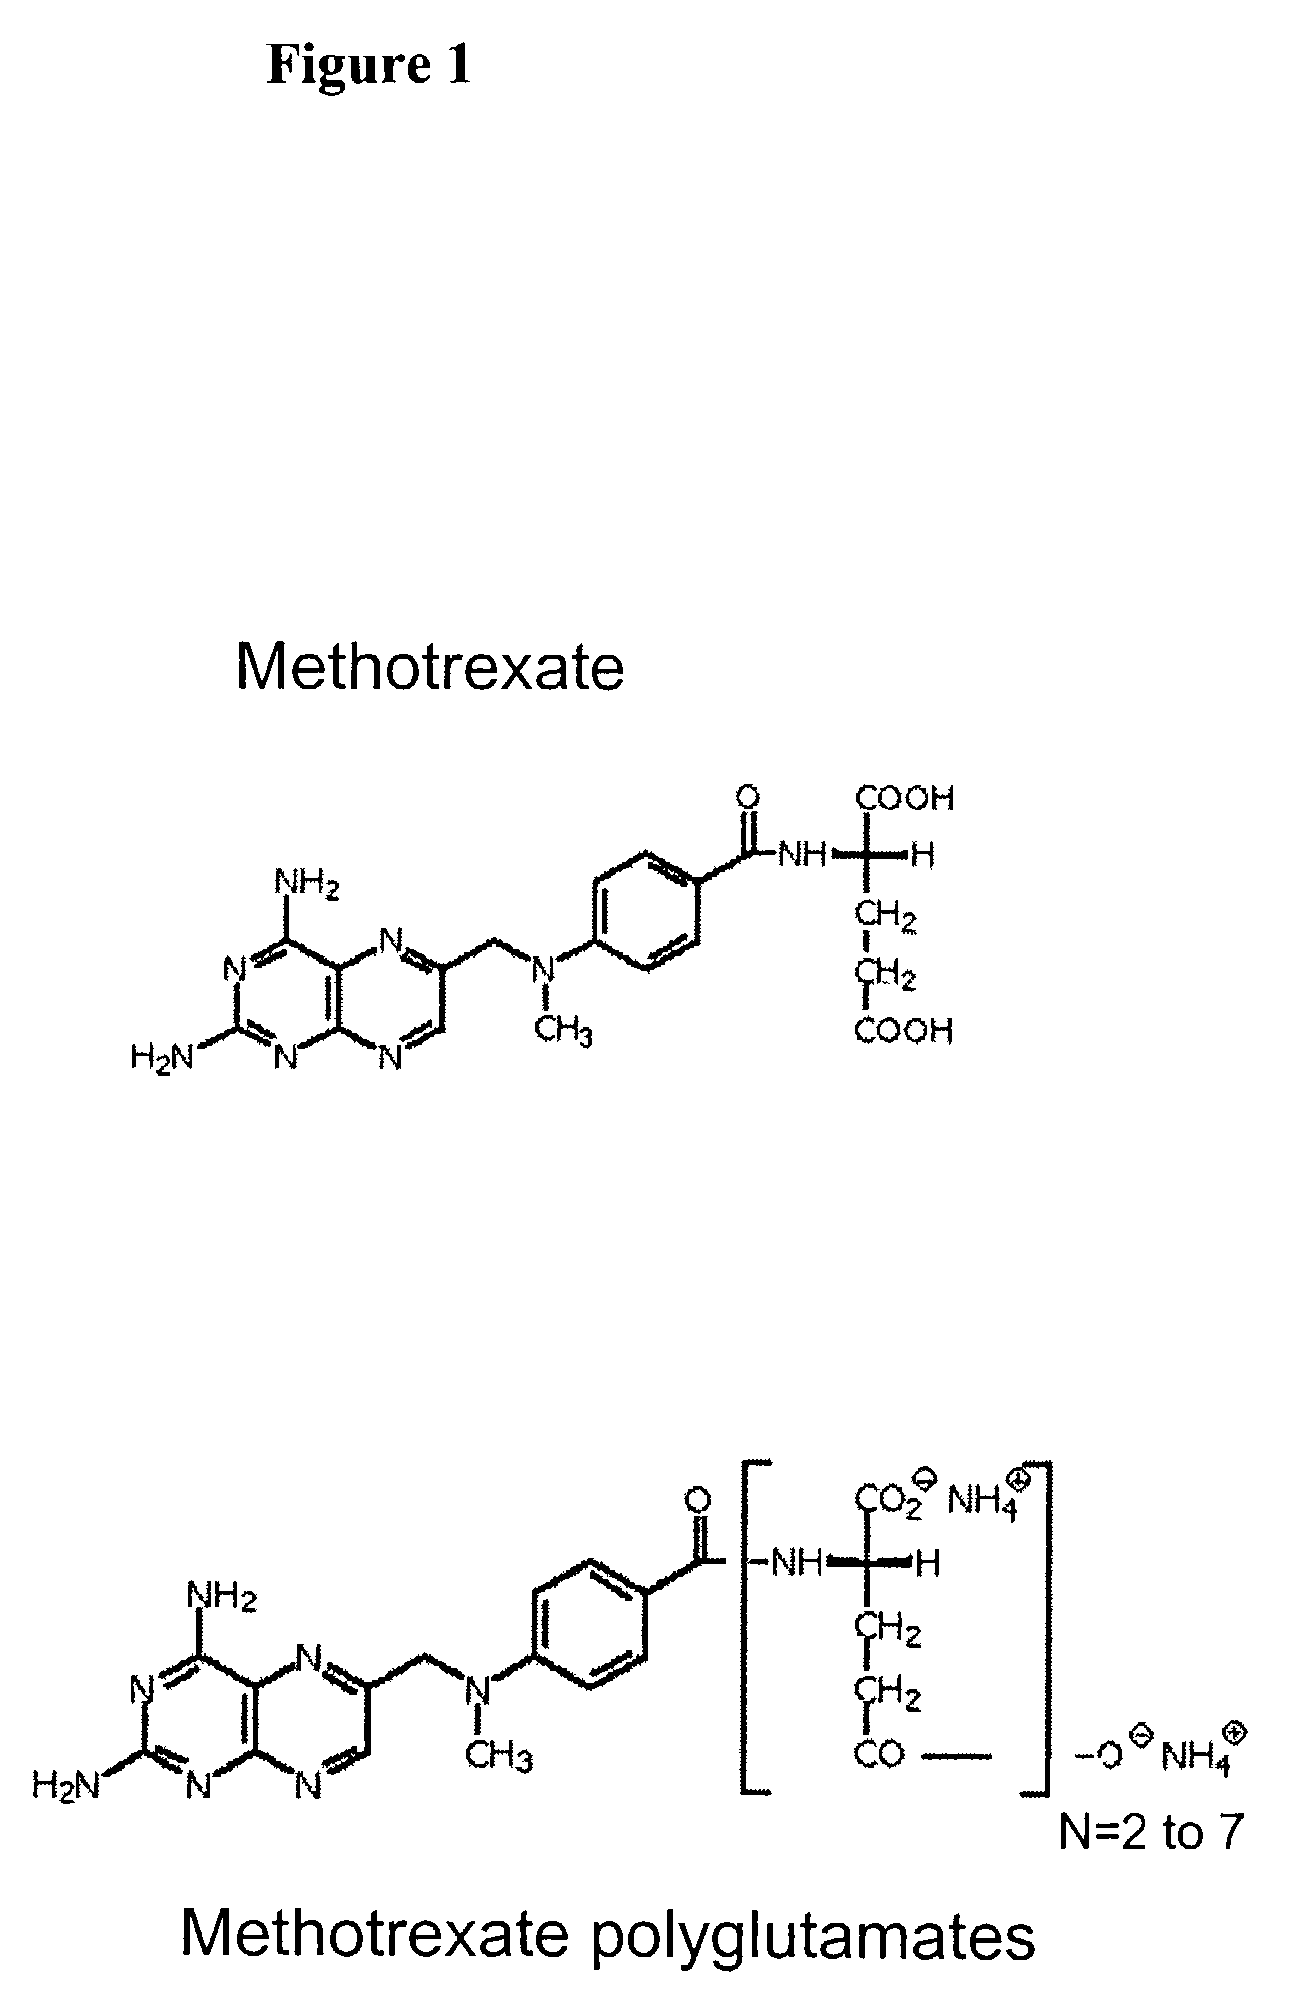 Methods of quantifying methotrexate metabolites